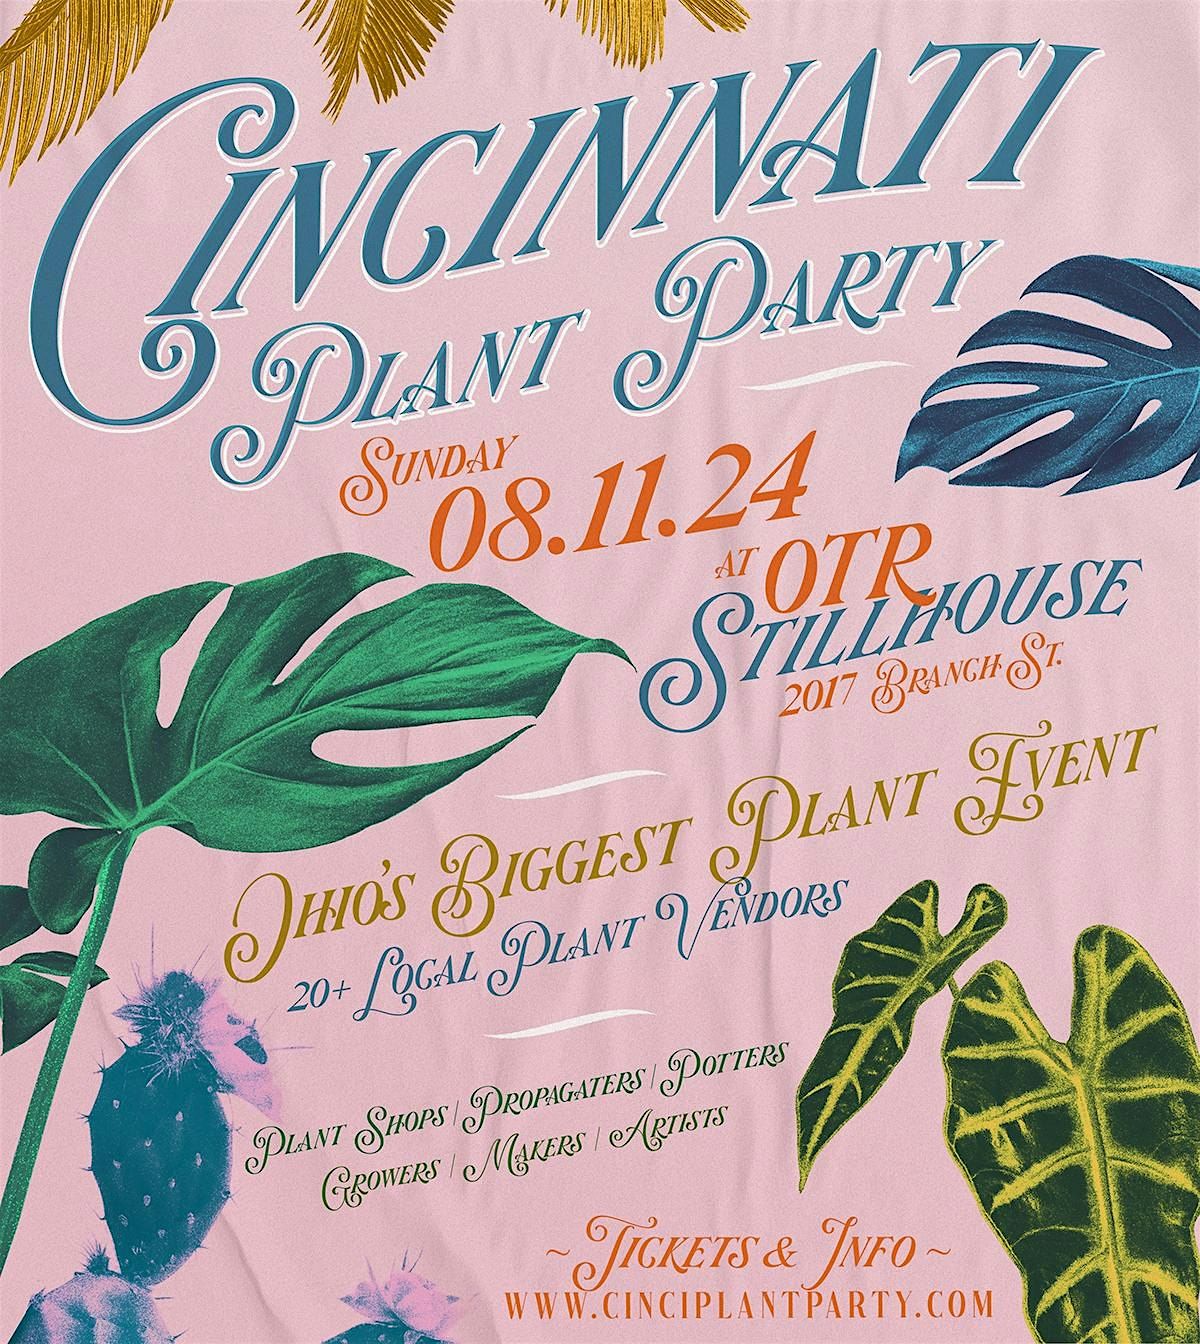 Cincinnati Plant Party